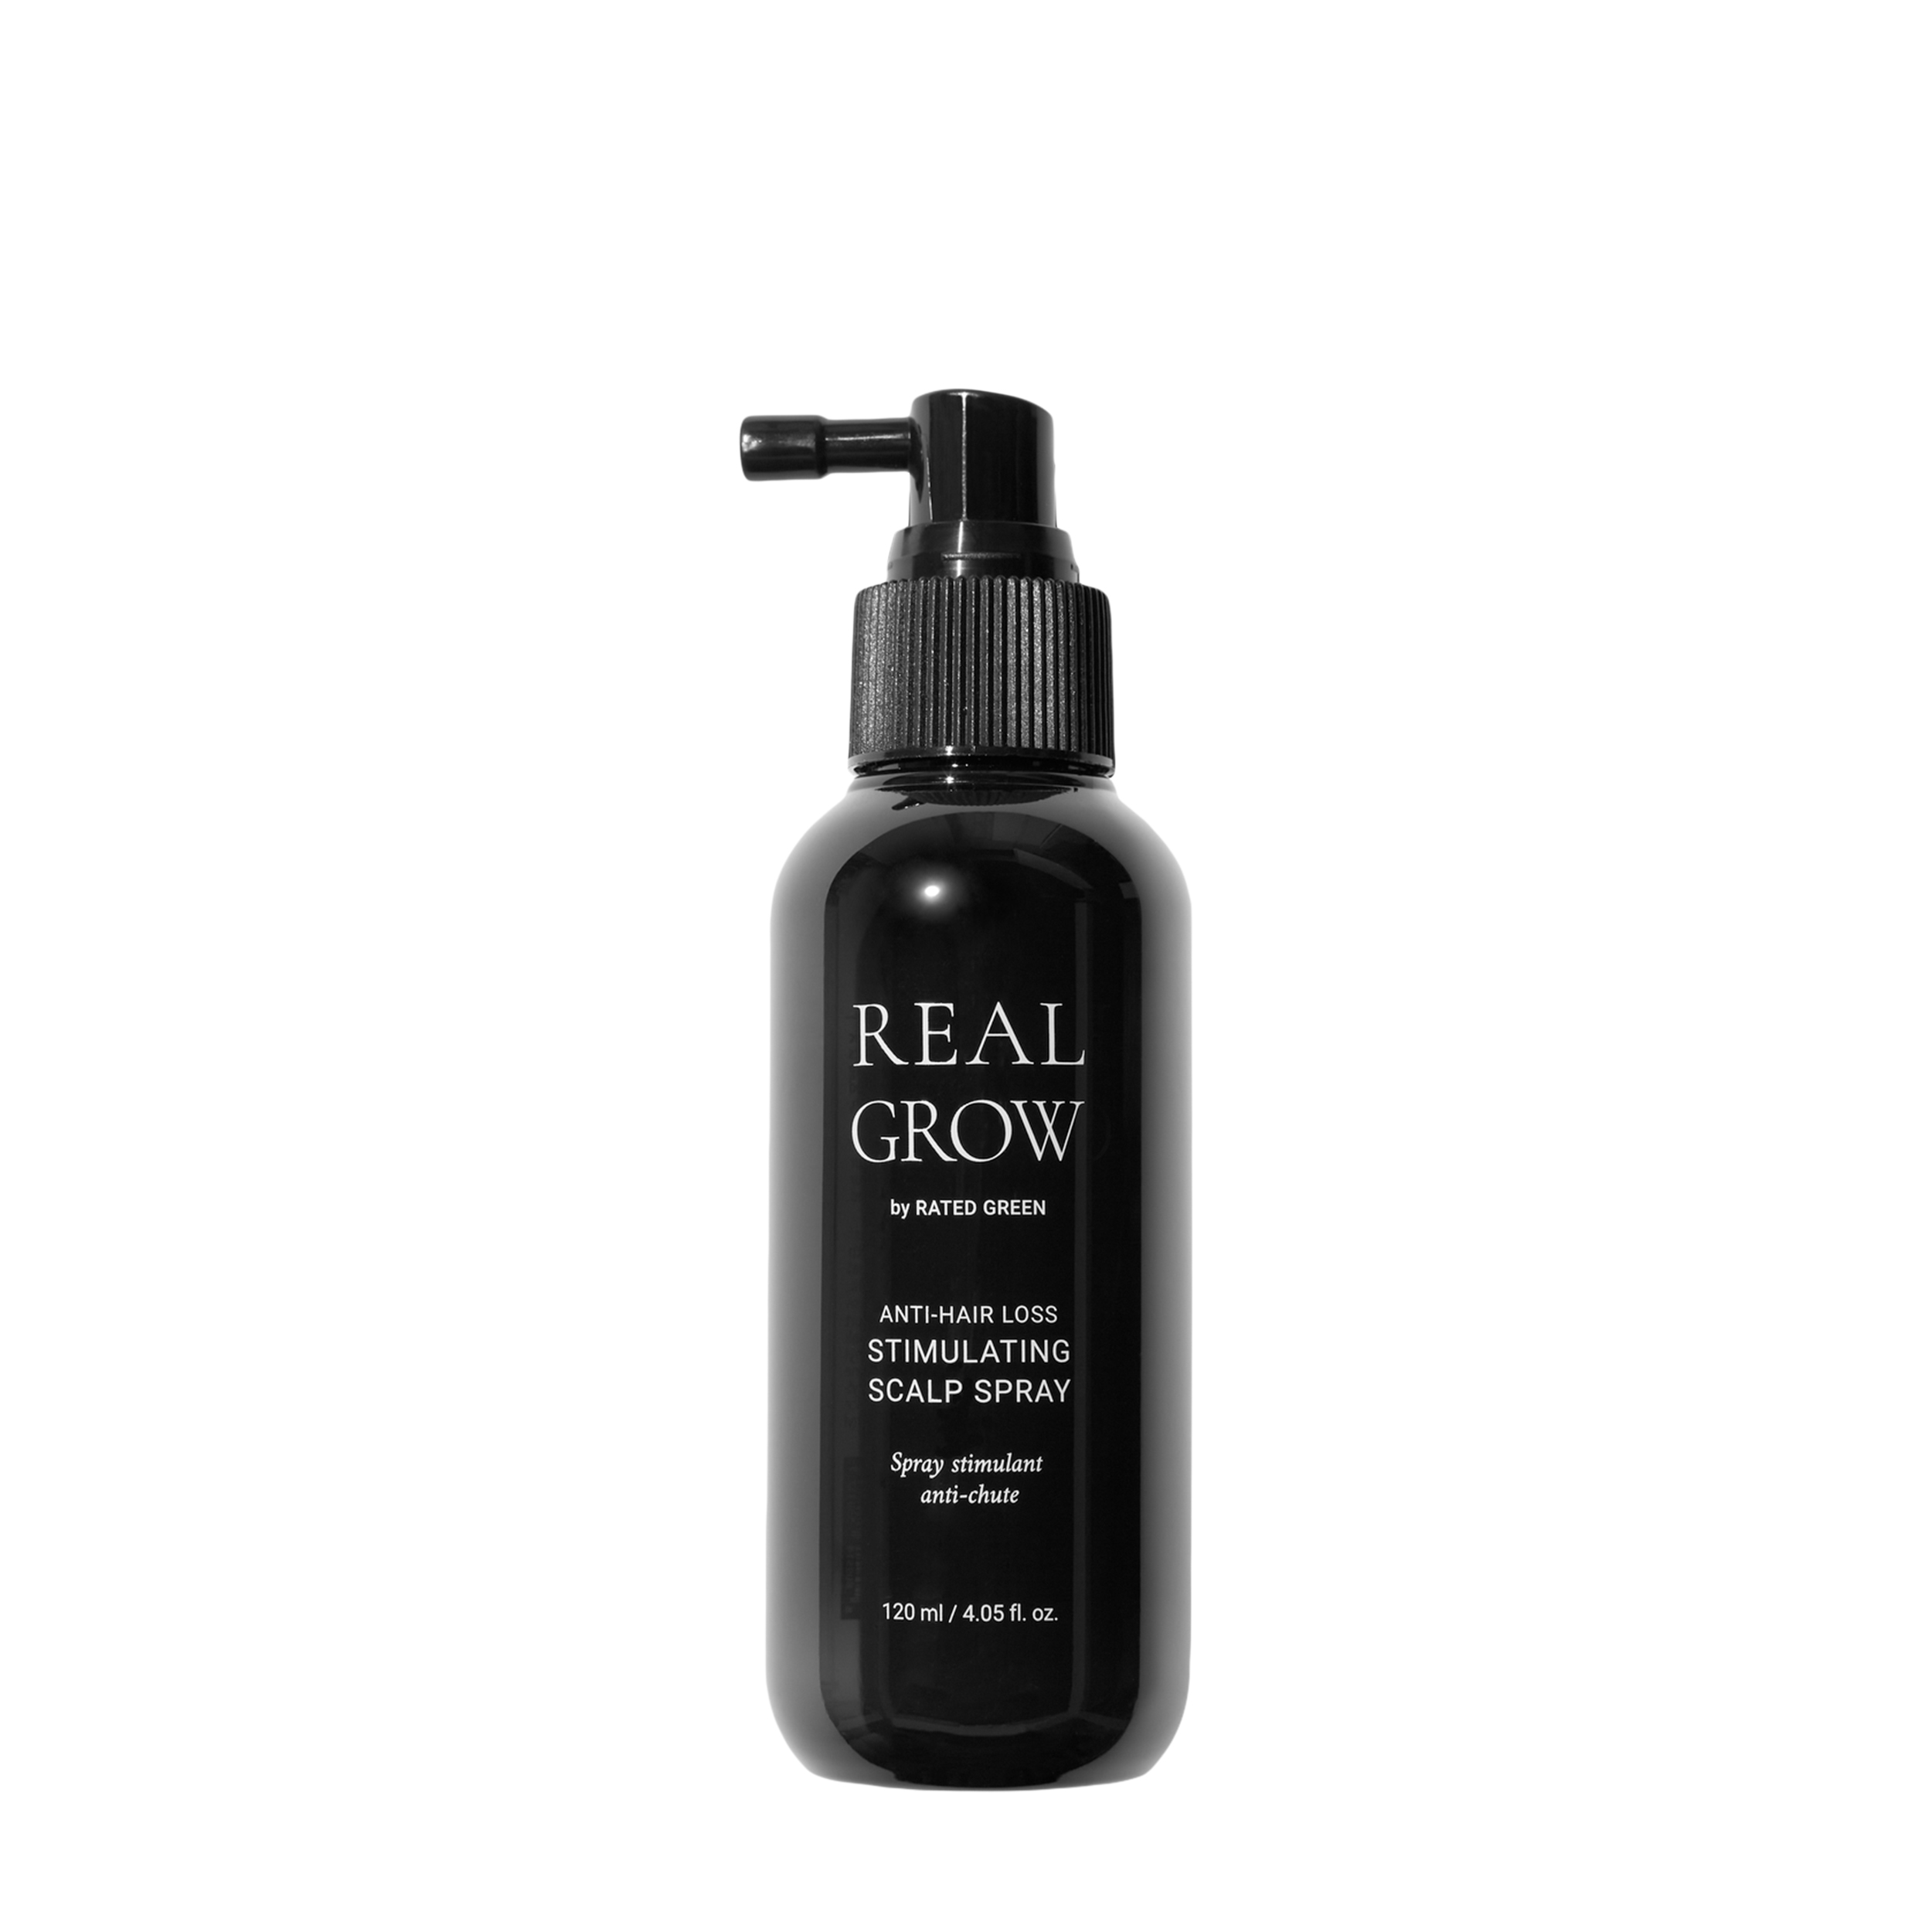 Rated Green Rated Green Спрей для кожи головы против выпадения волос
Real Grow 120мл от Foambox